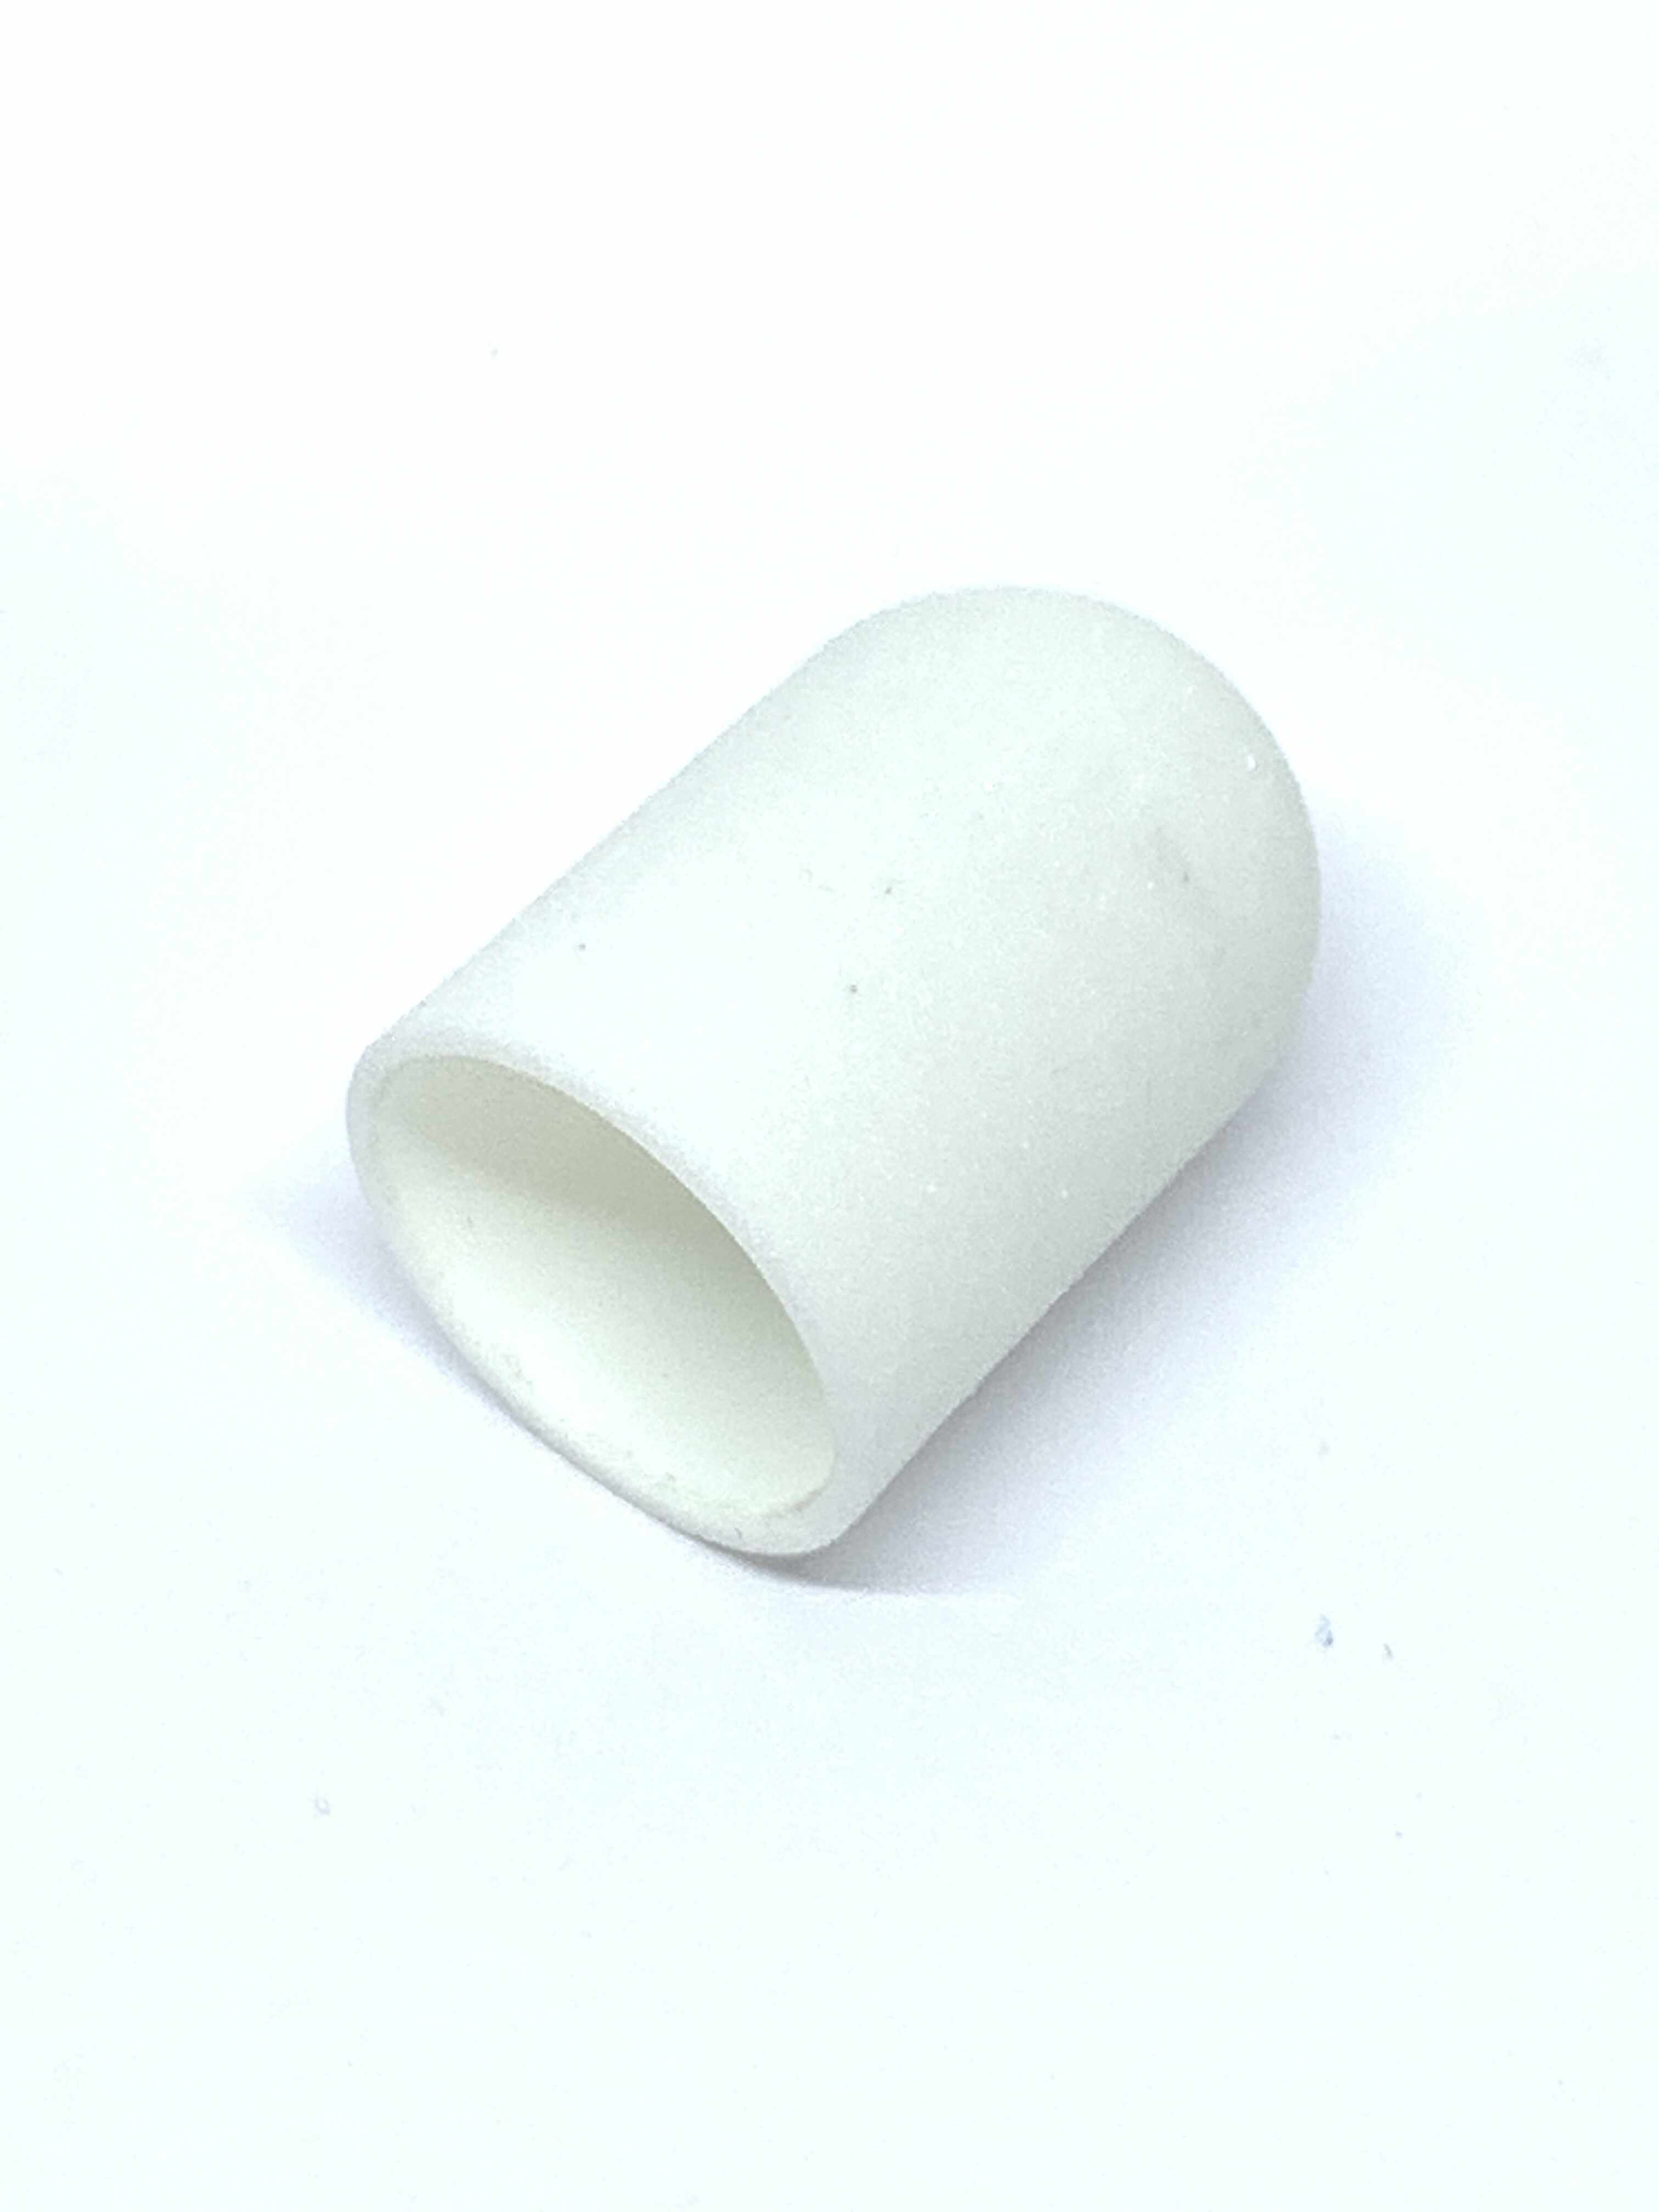 Smirghel Freza Electrica 16 x 25 mm - 150, White, 1 buc